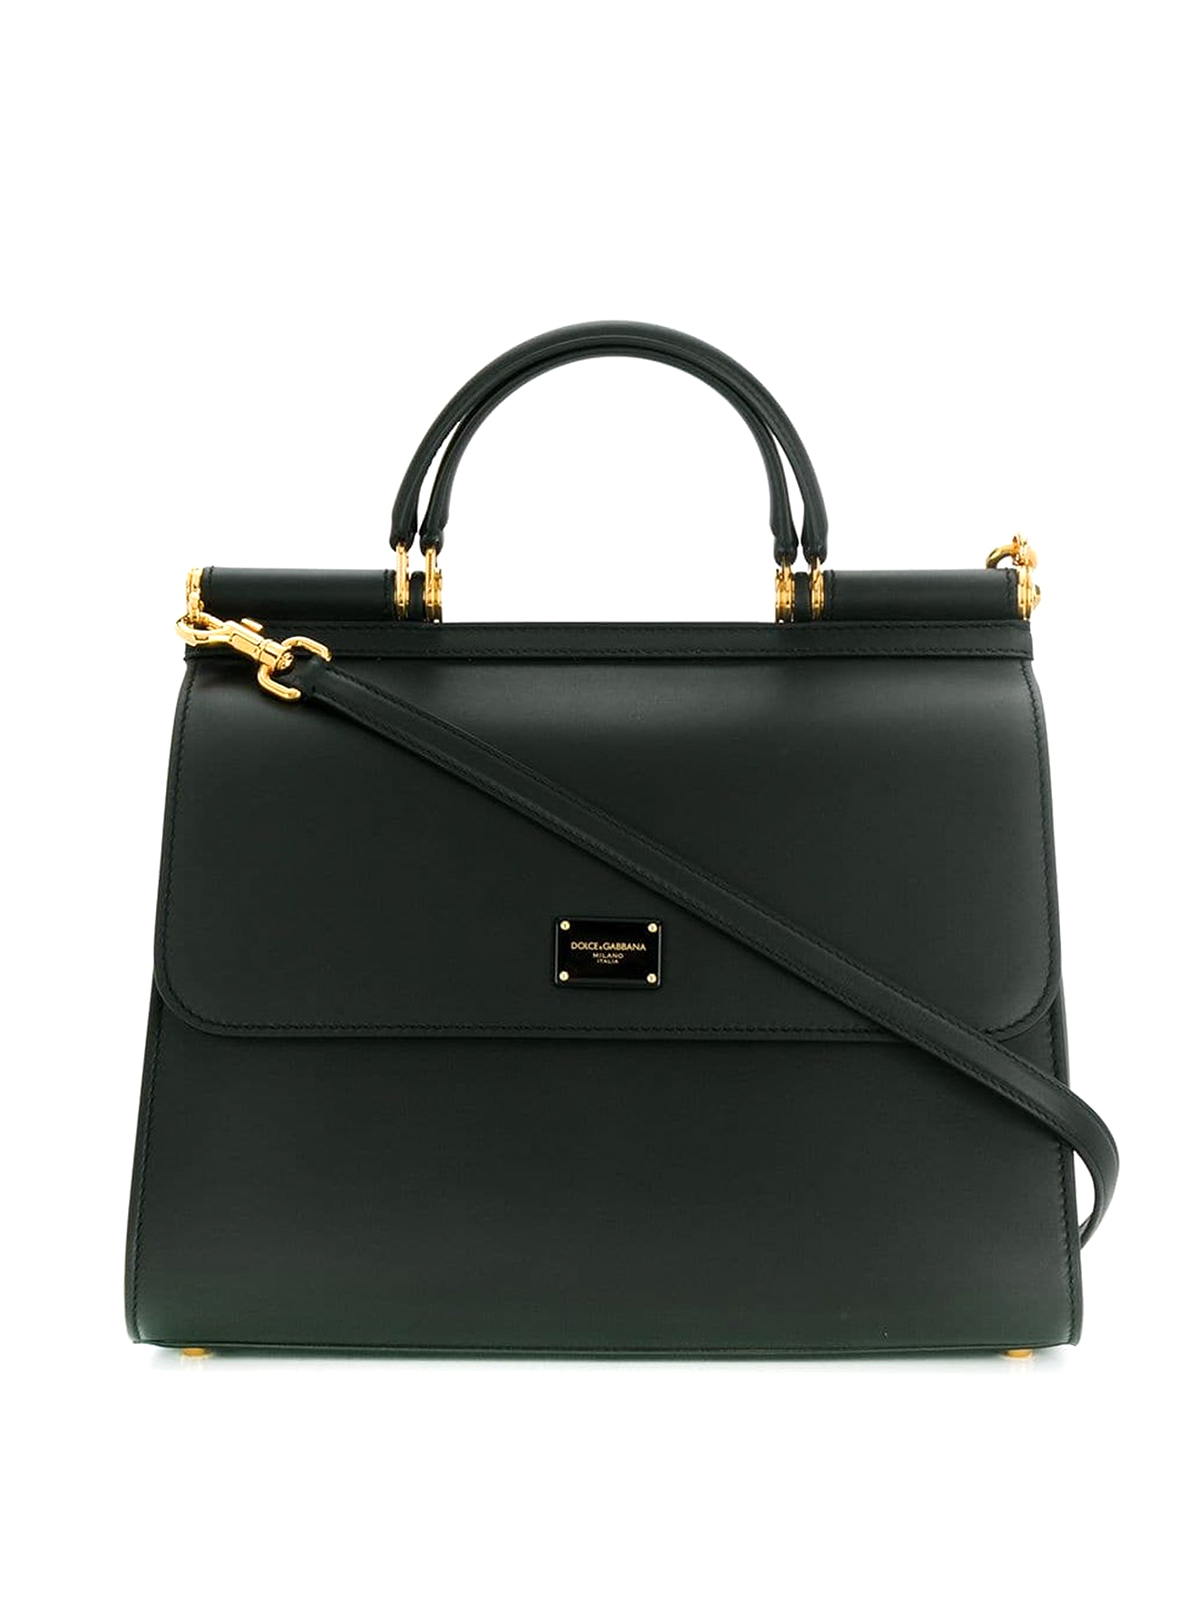 Dolce & Gabbana Sicily 58 large leather bag